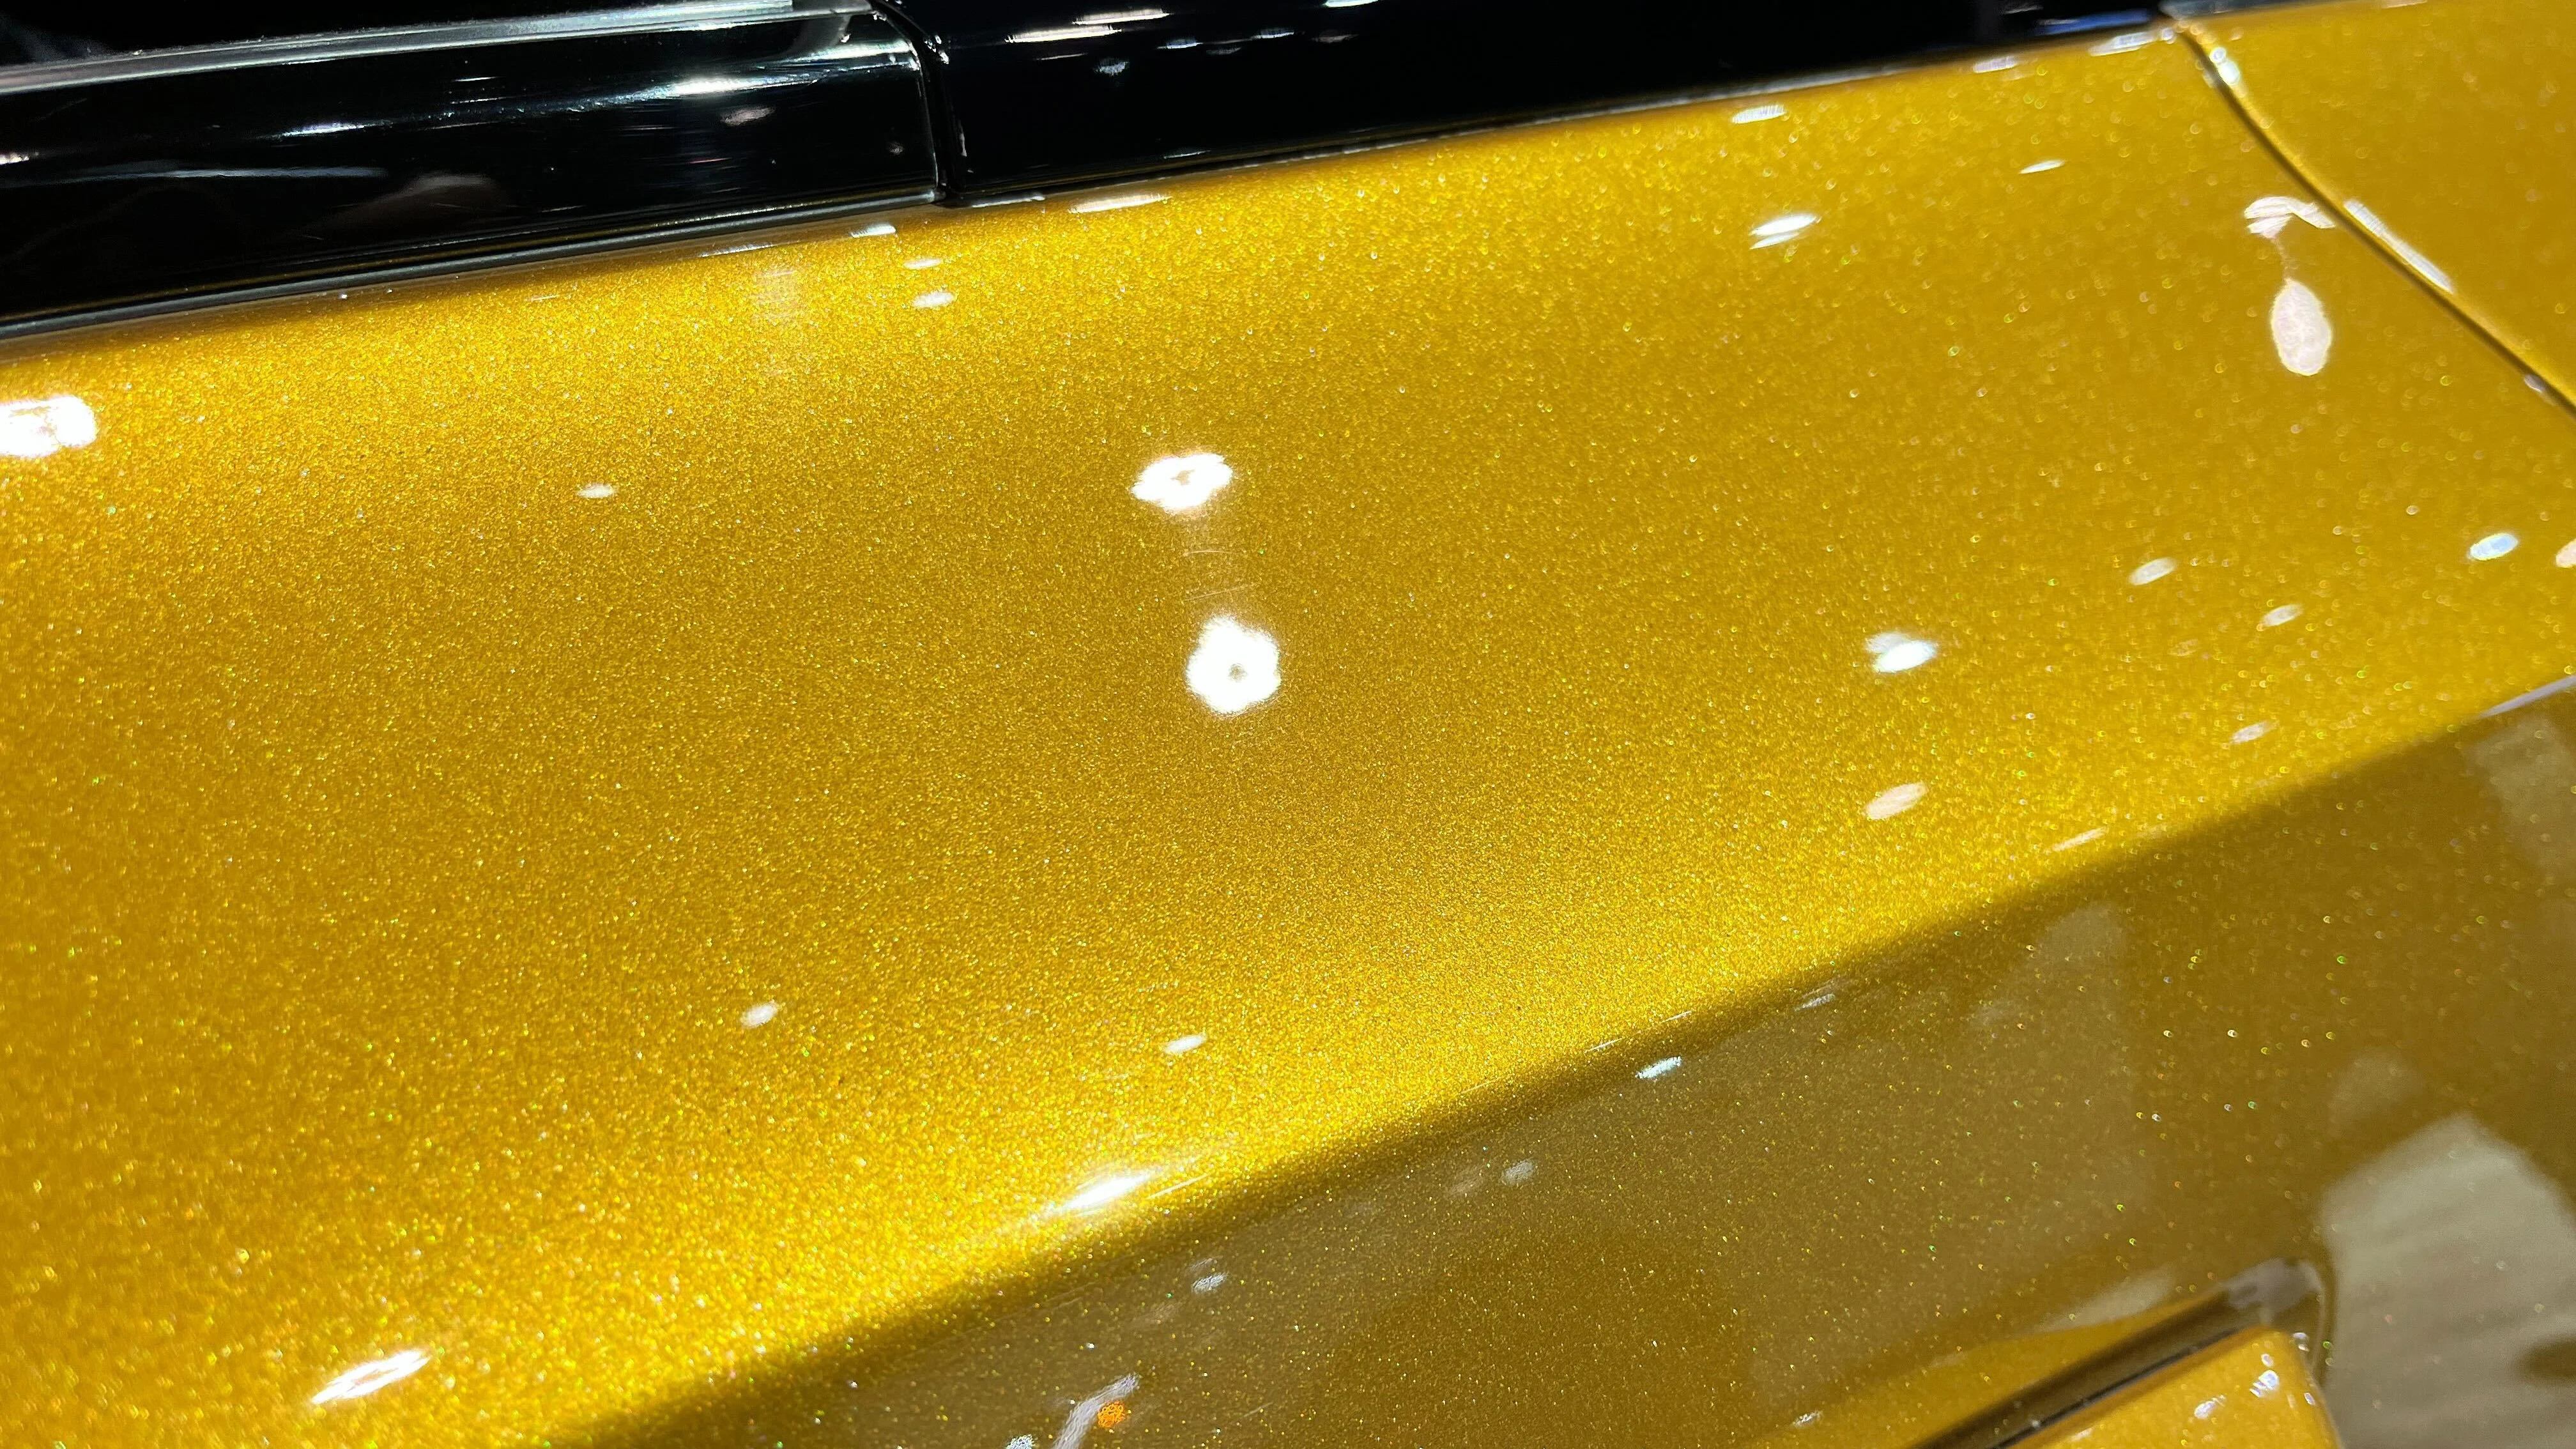 Acura Type-S gold paint